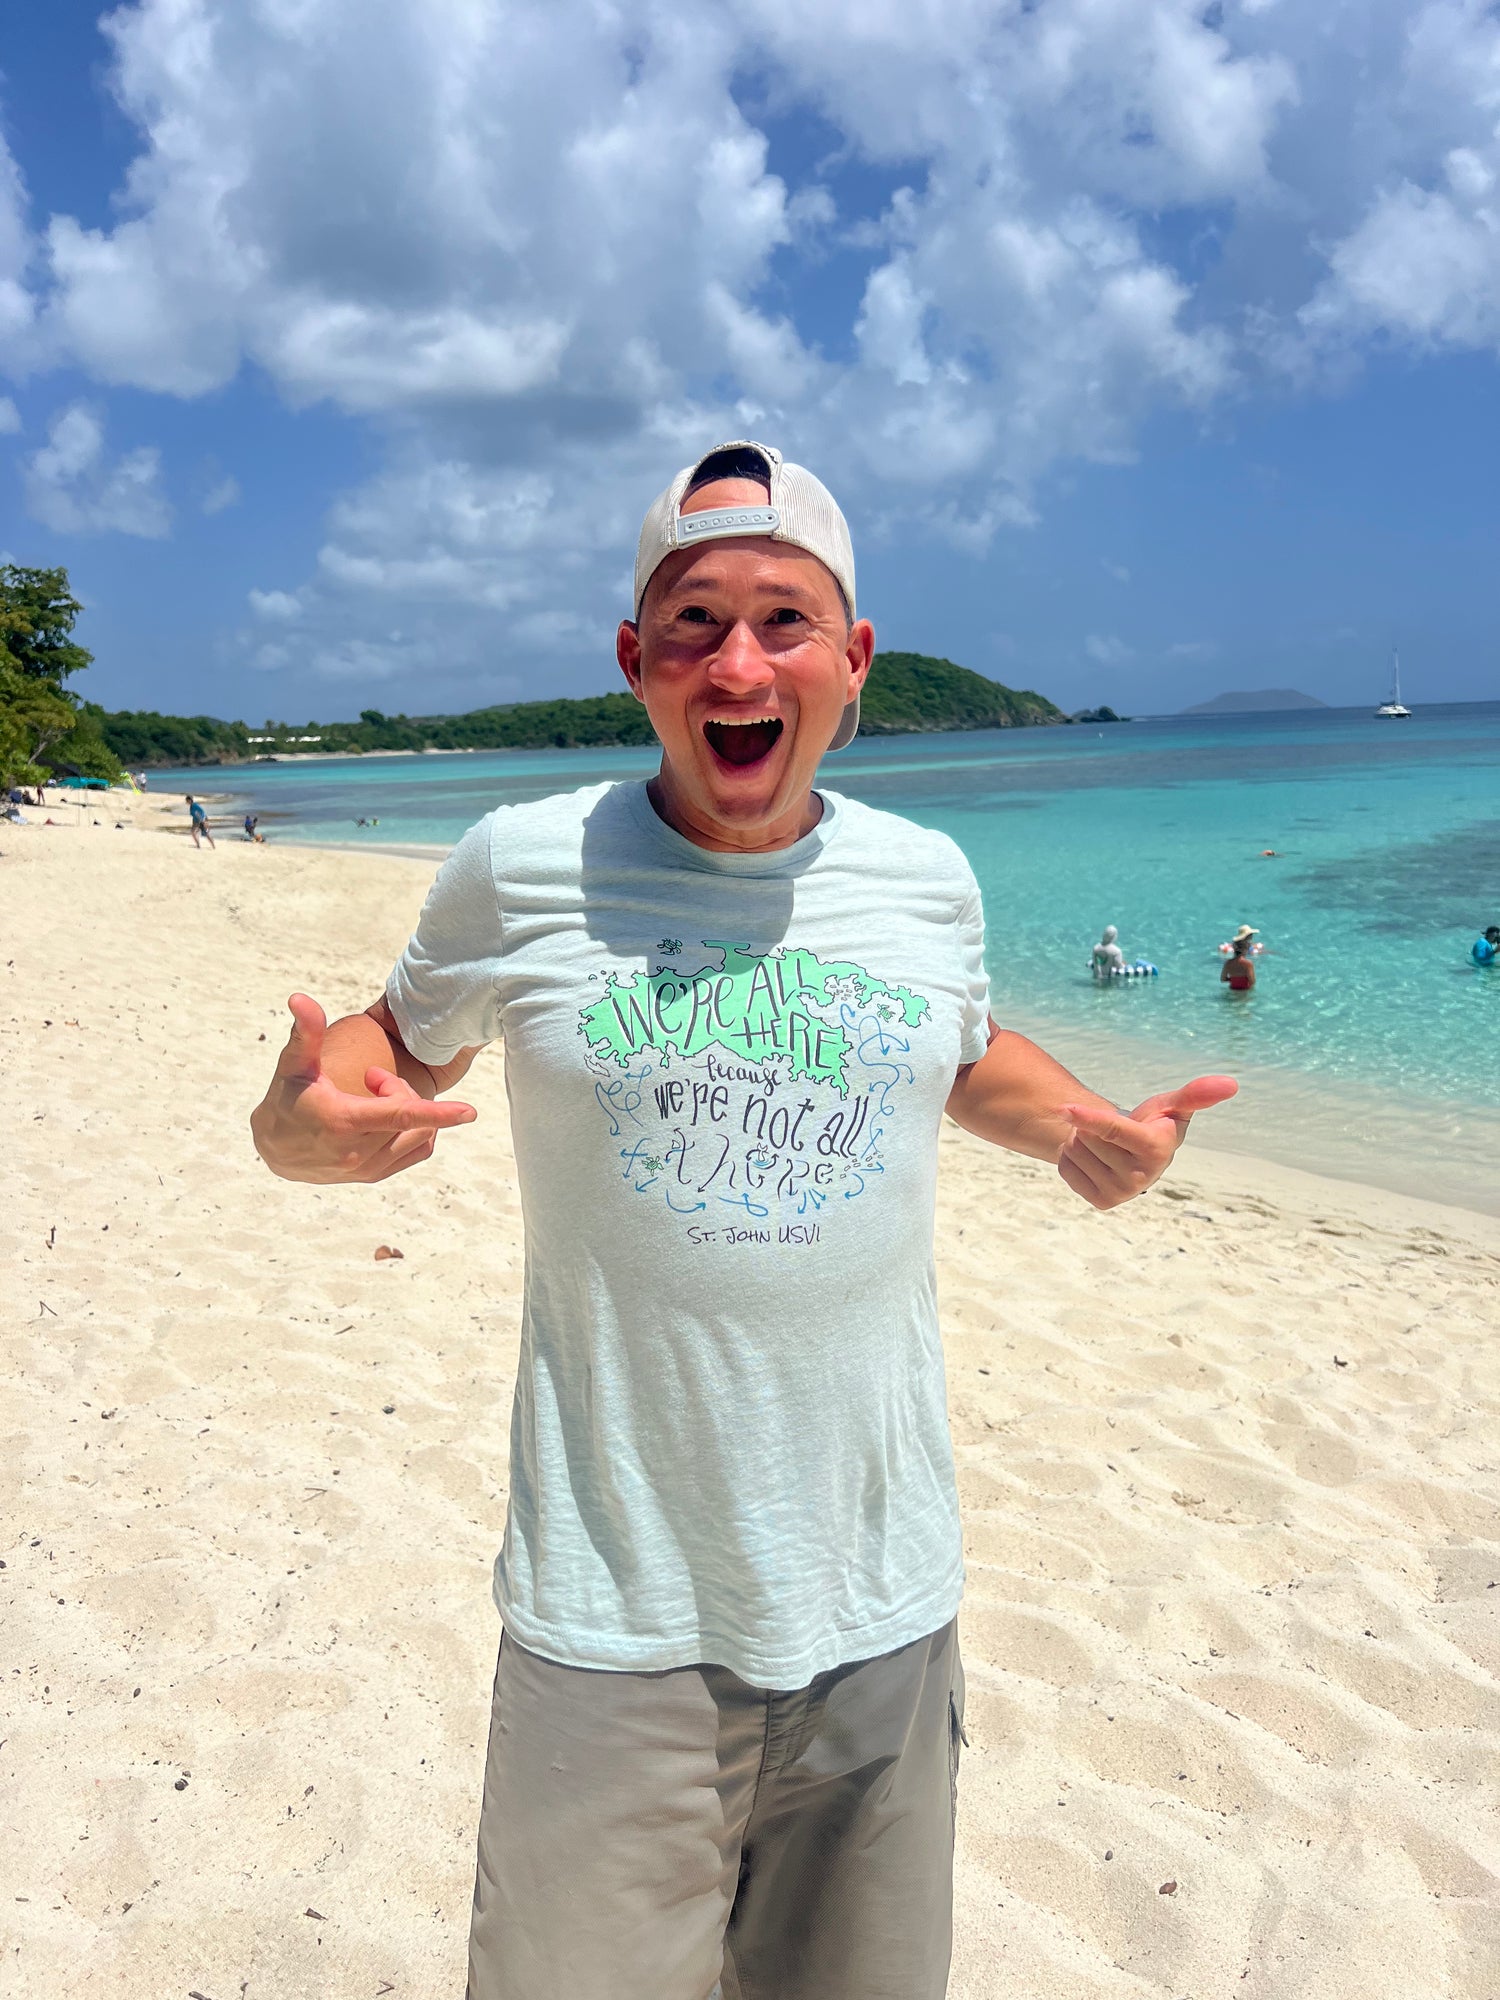 St. John USVI resident Mat excitedly wearing an original art souvenir t-shirt while standing on Hawk's Nest Beach with beautiful Caribbean ocean blue water in background